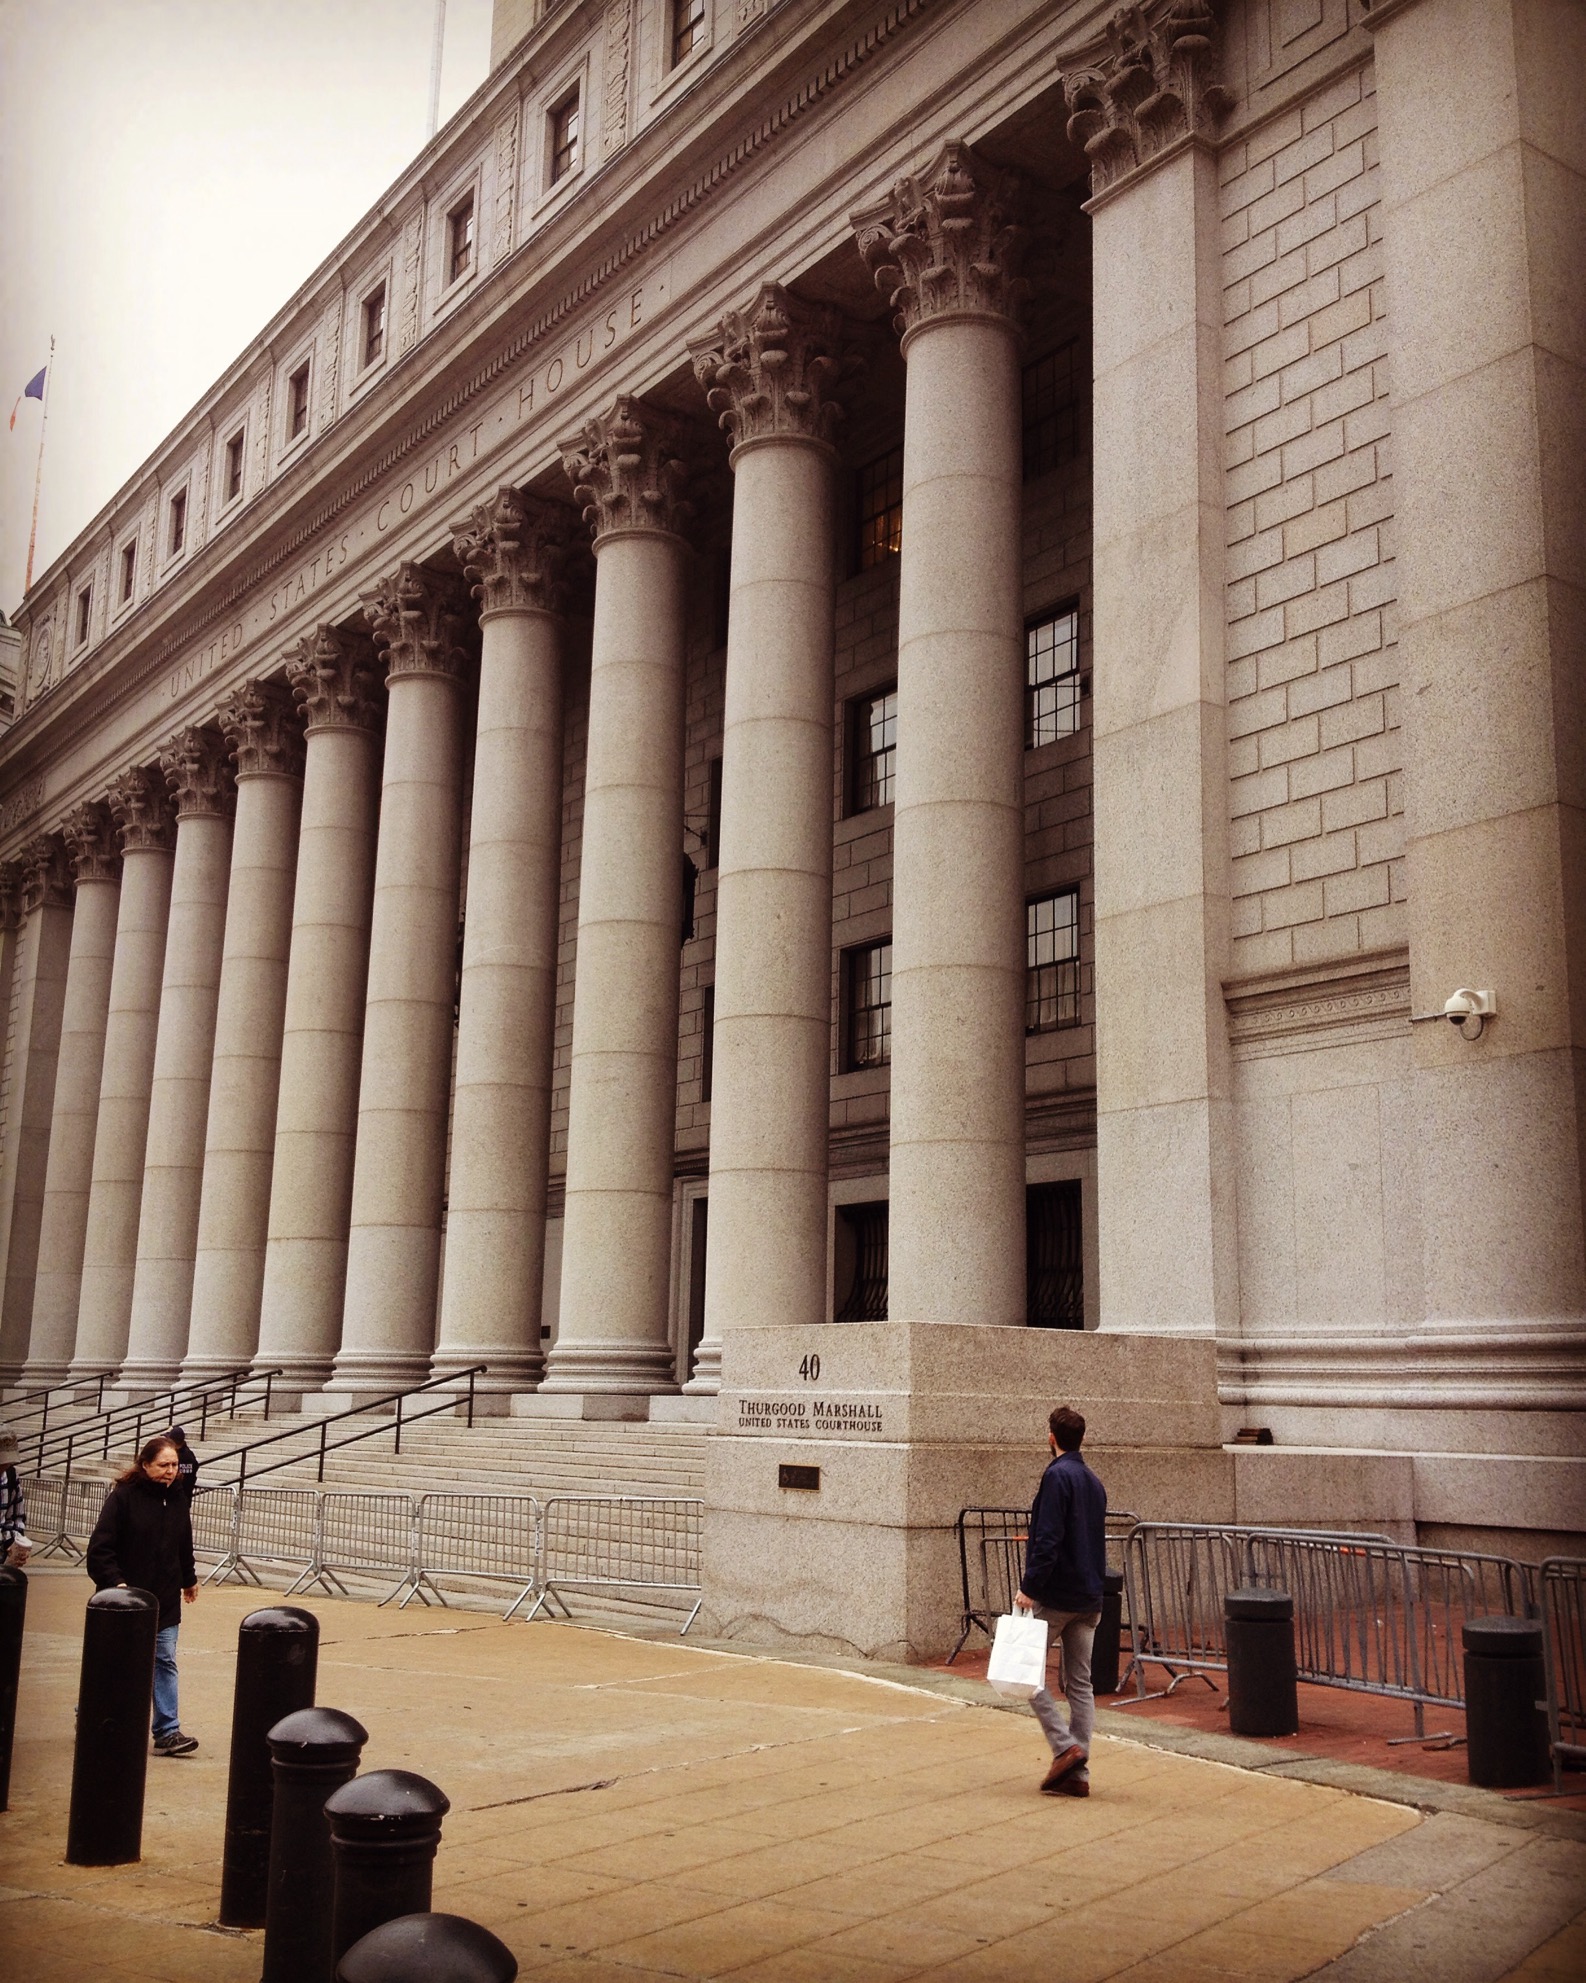 Thurgood Marshall Courthouse, New York City